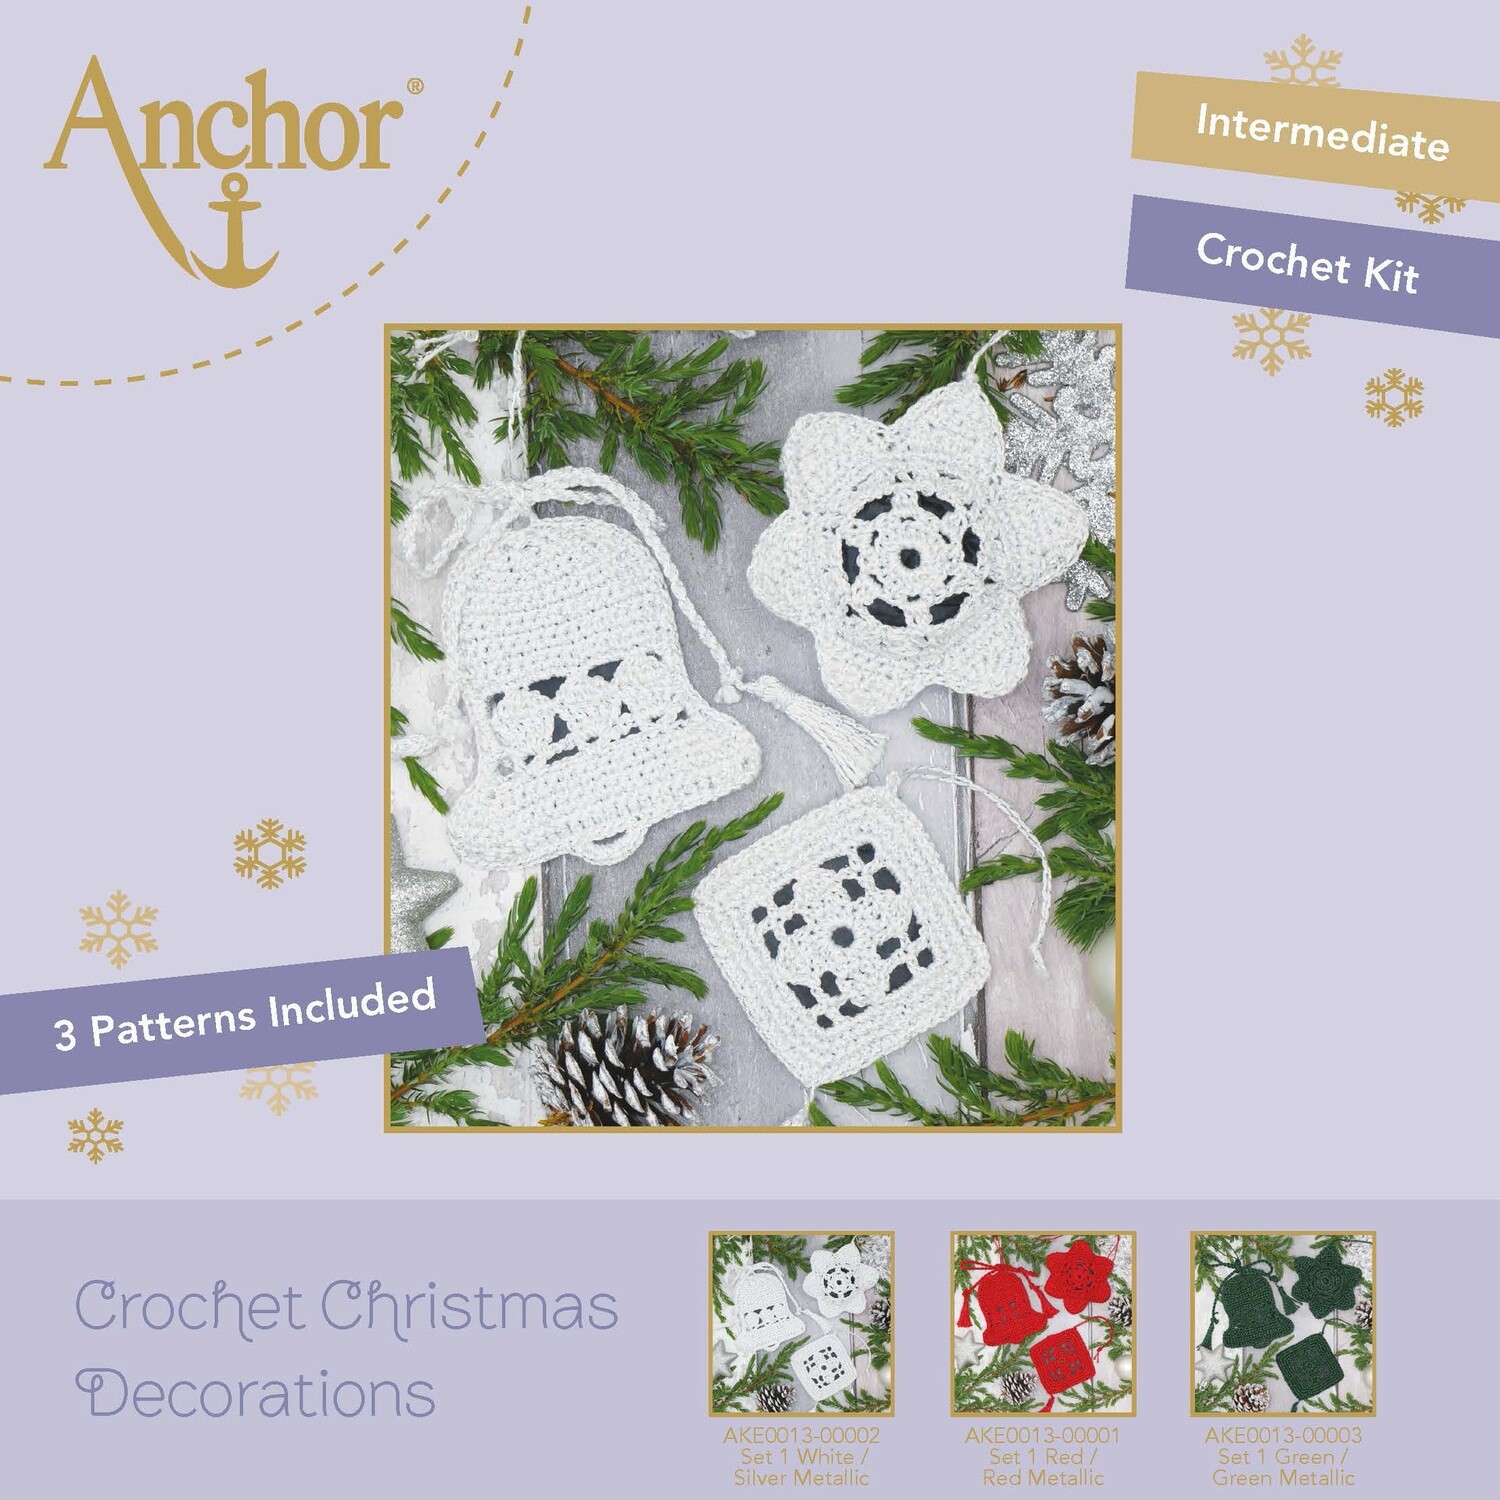 Crochet Christmas Decorations - Set 1 White/Gold Metallic